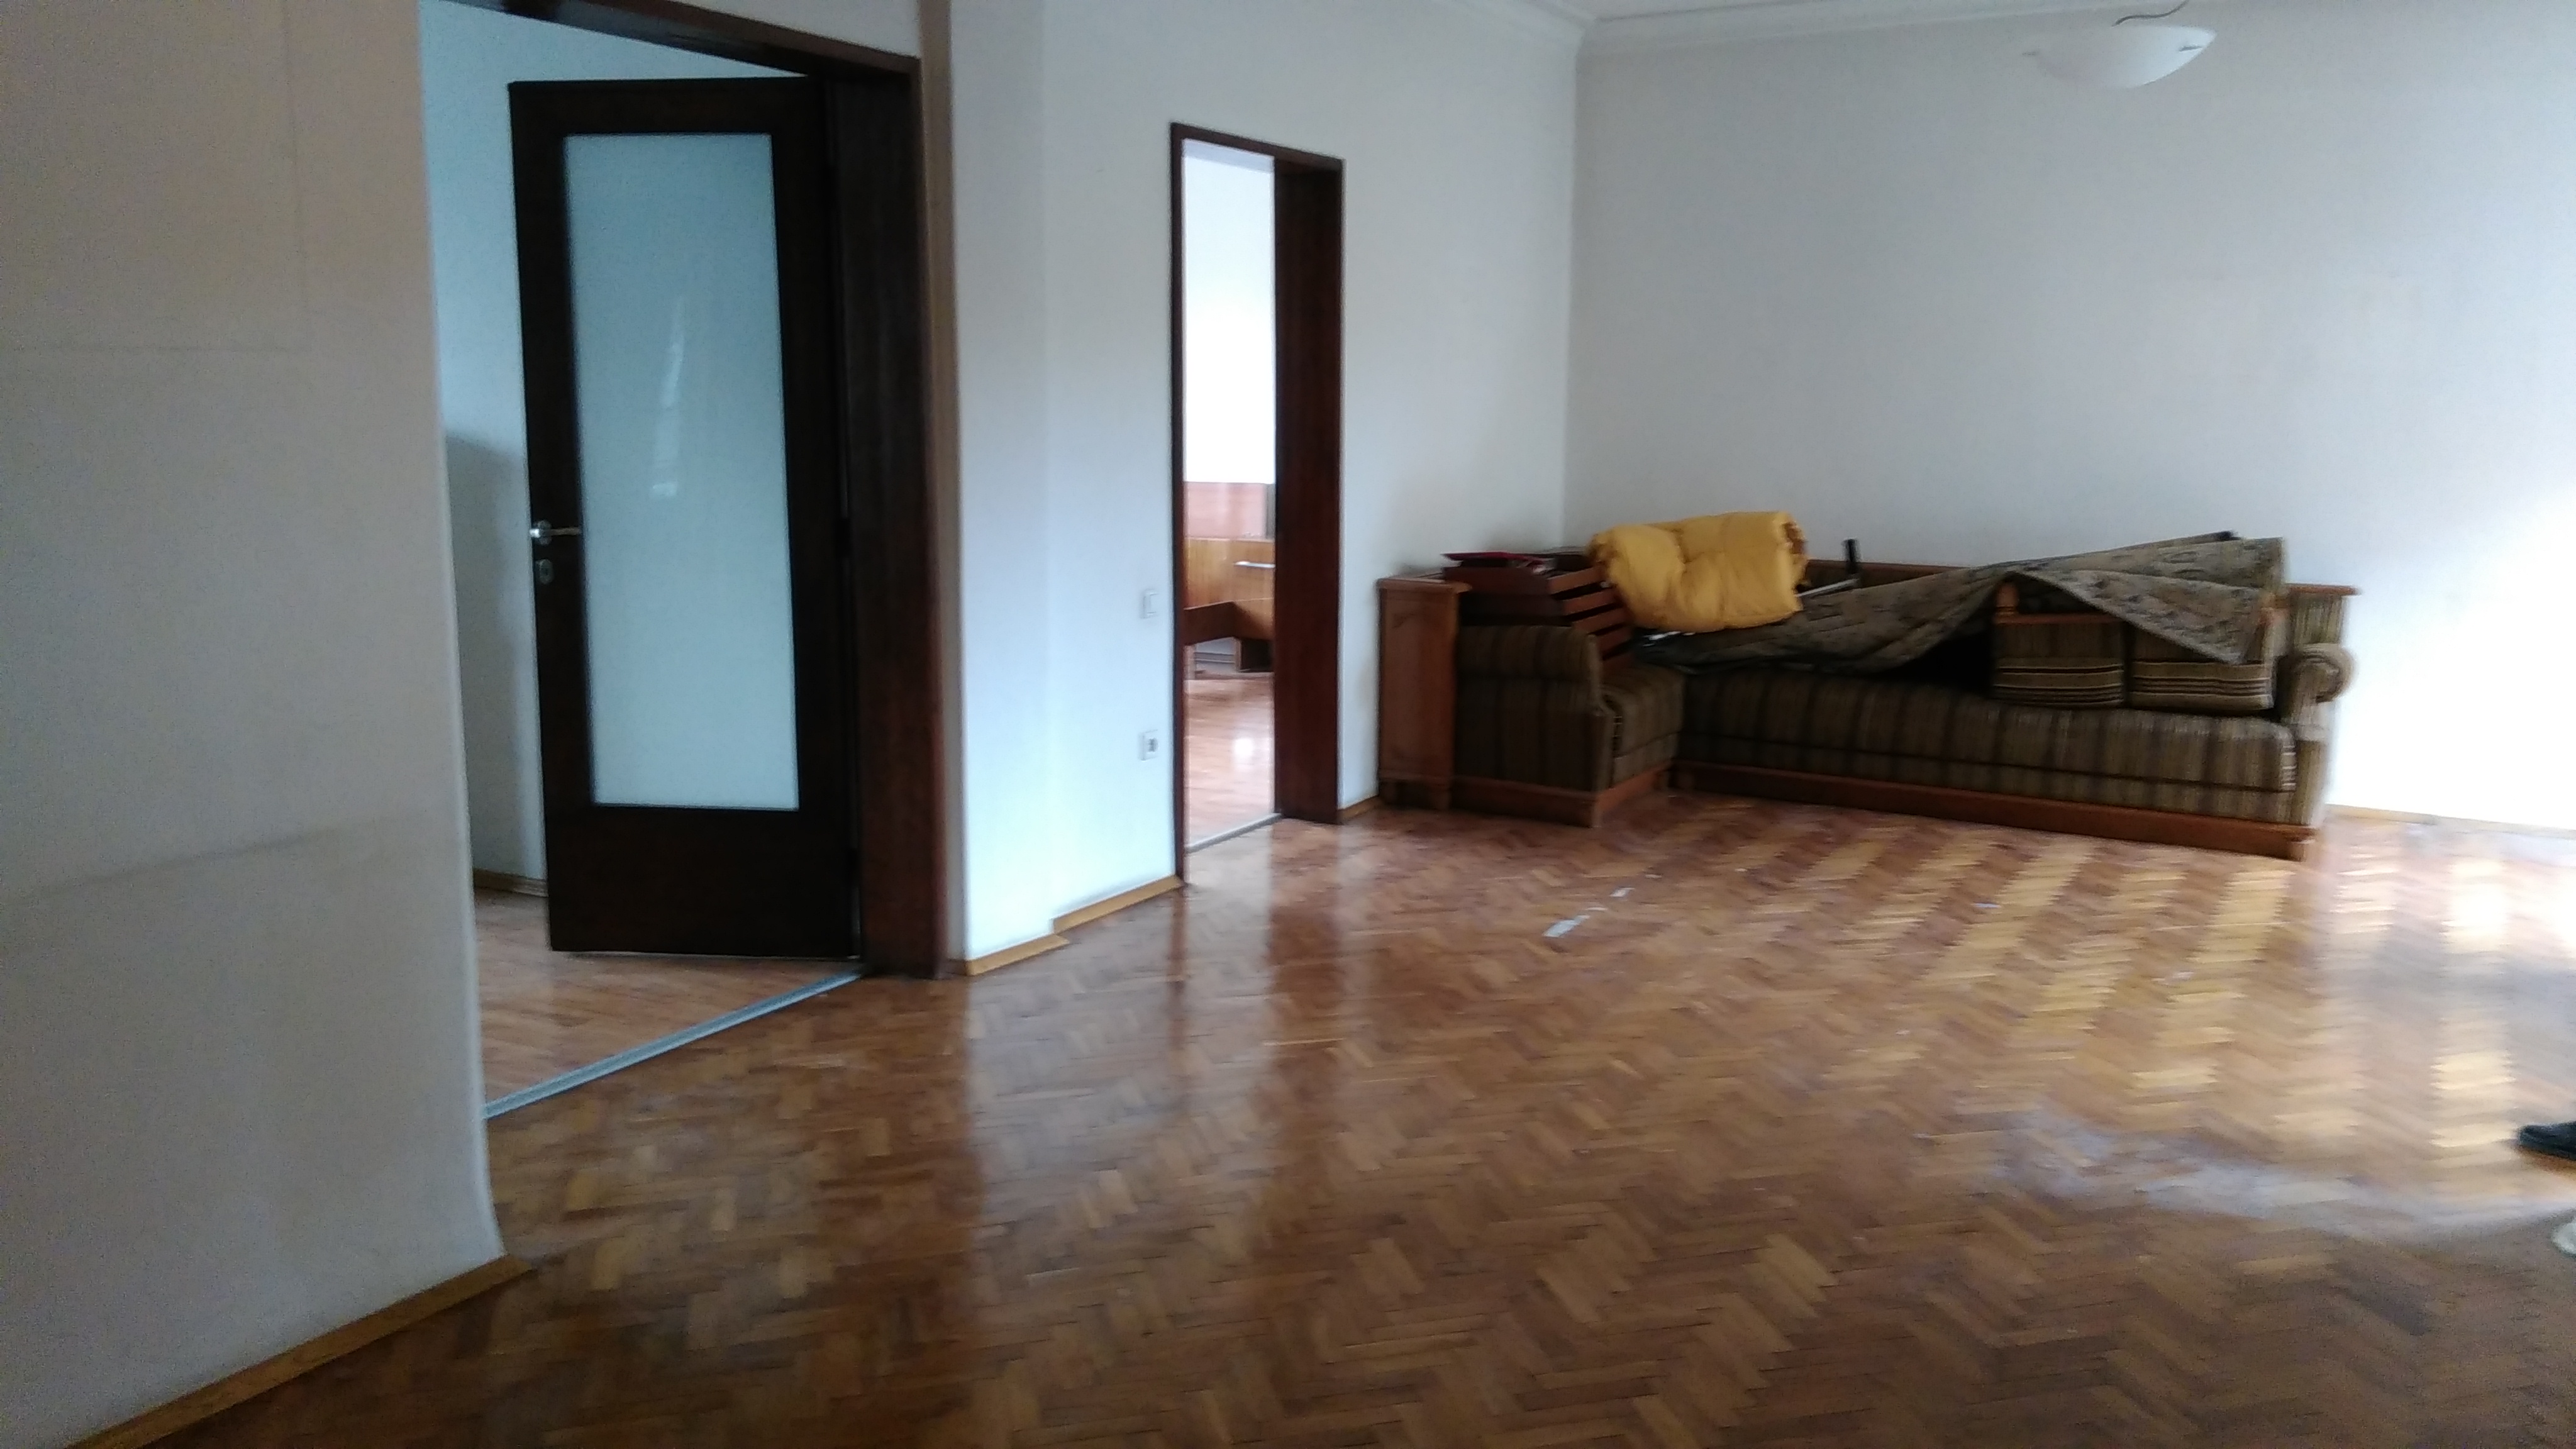 3 стаен апартамент, ж.к. Център, цена 149900 евро- на бул. Прага, до Петте кьошета - image